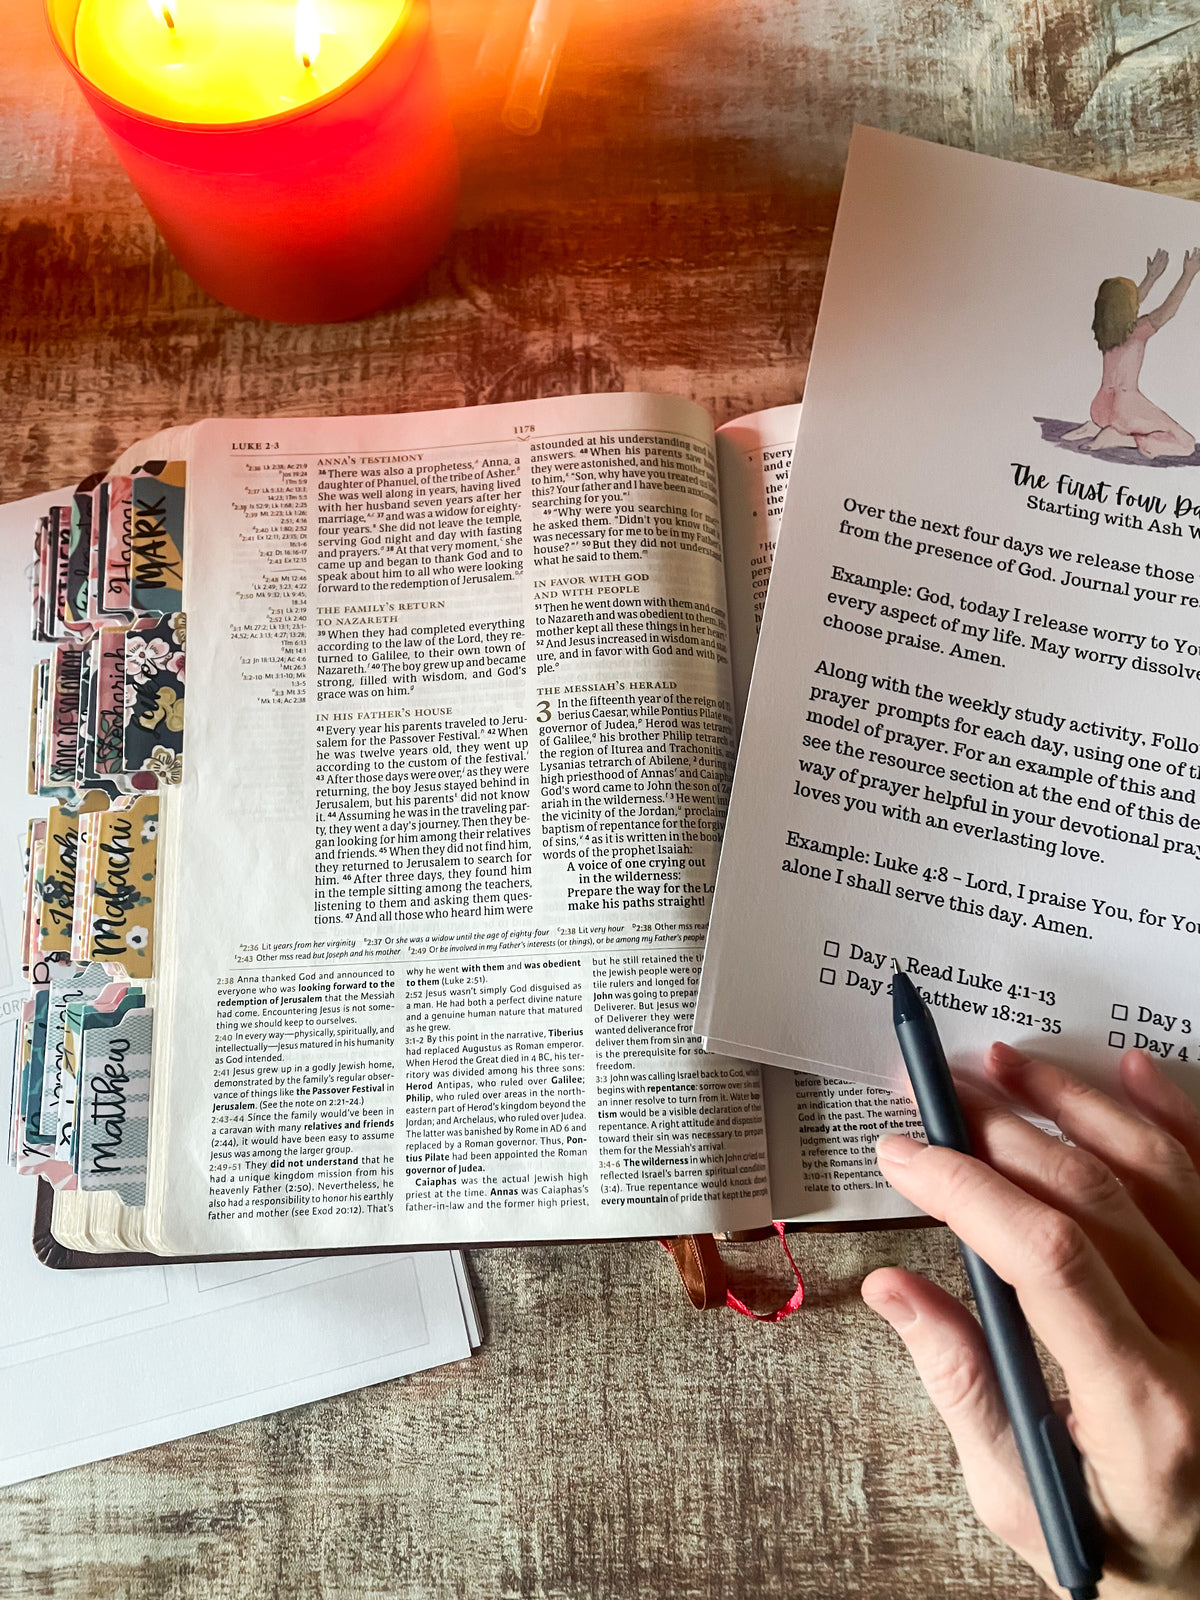 The Journey to the Cross: A Lenten Devotional Study